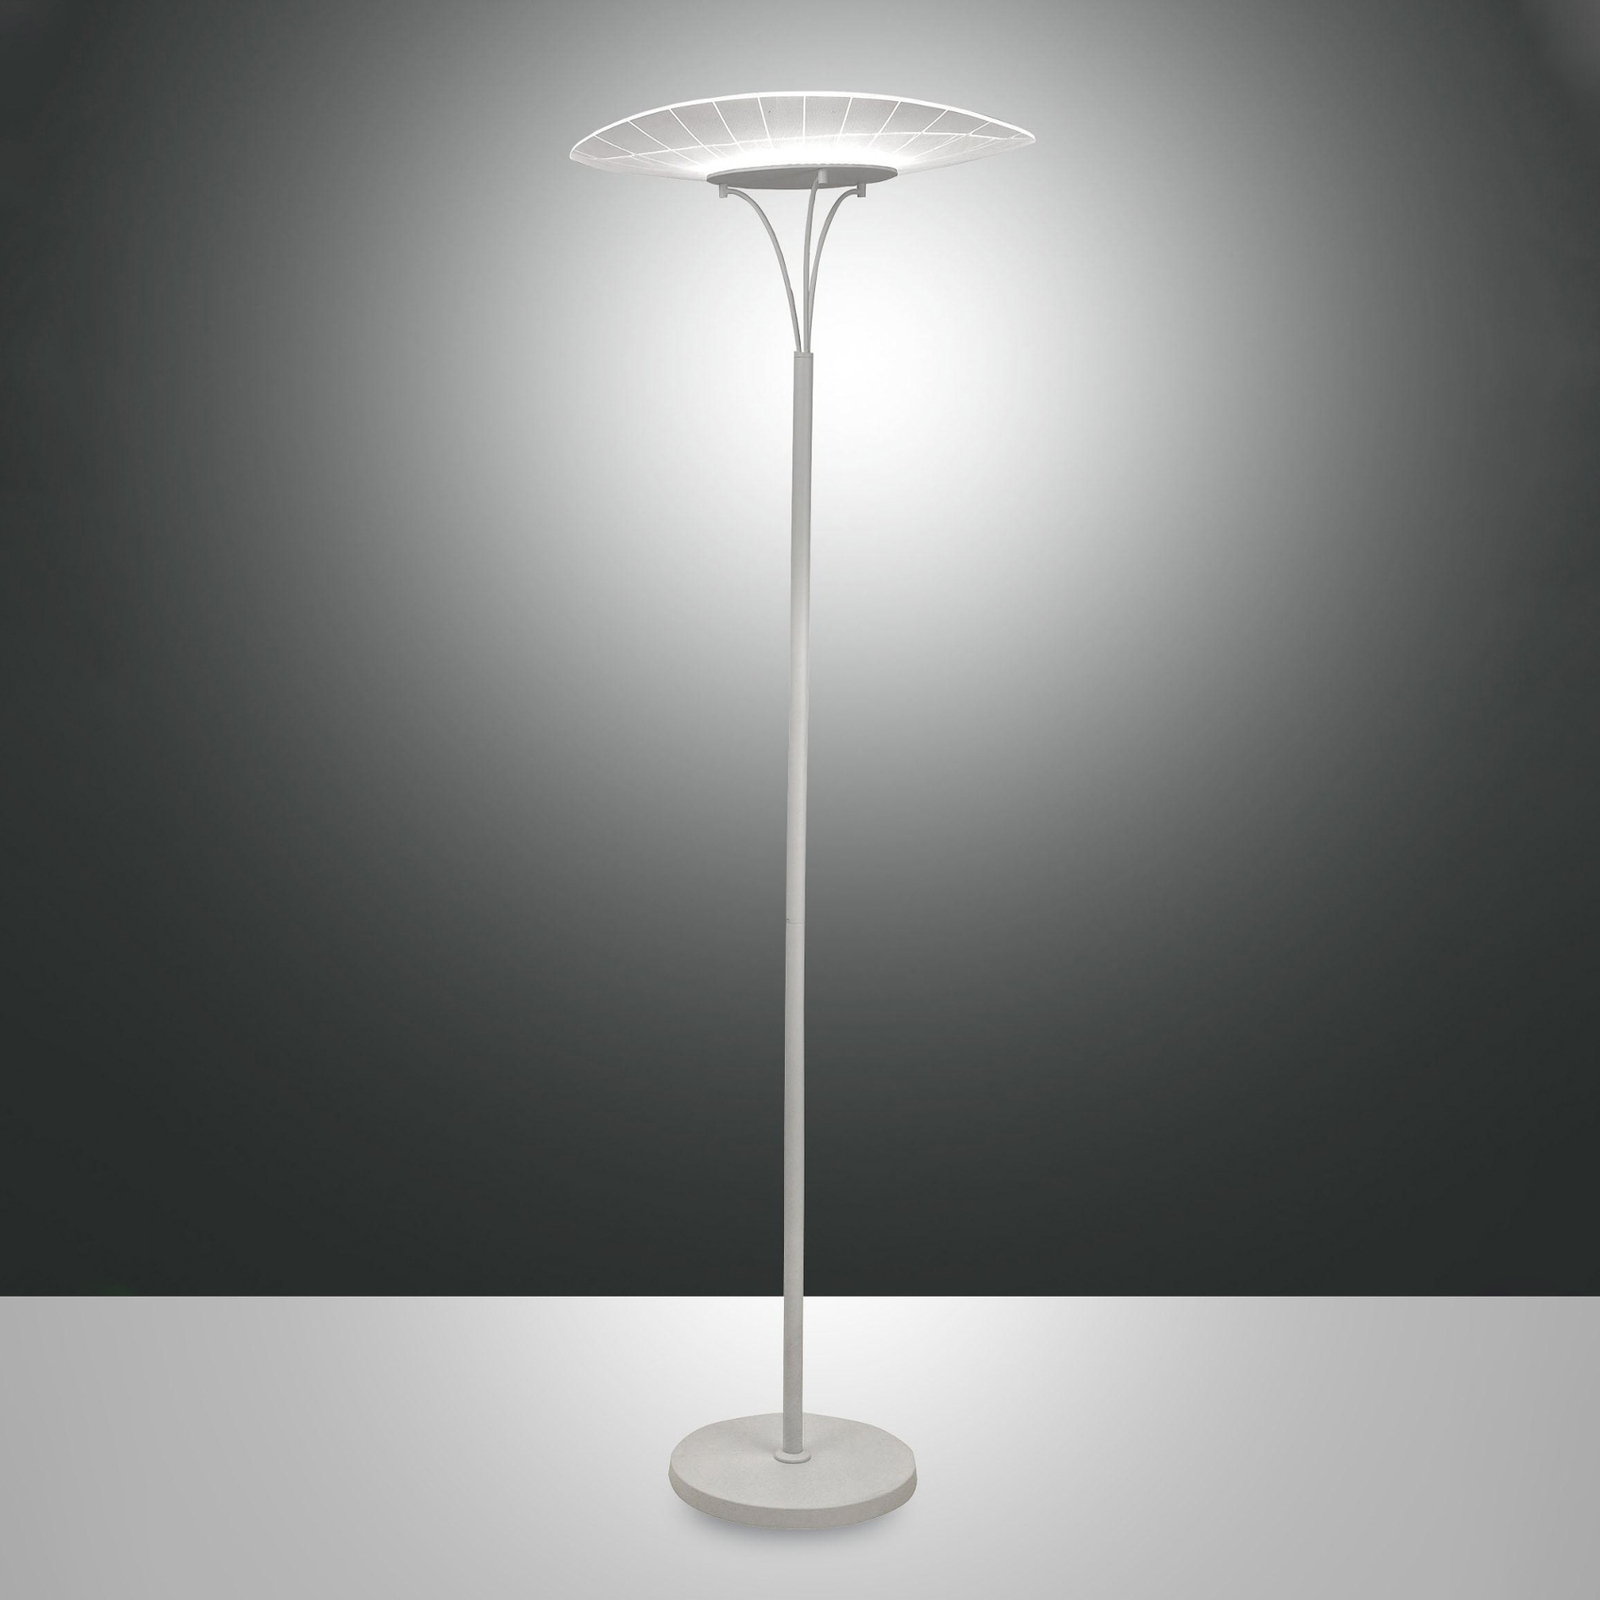 LED-Stehleuchte Vela, weiß/transparent, 175cm, Acryl, Dimmer